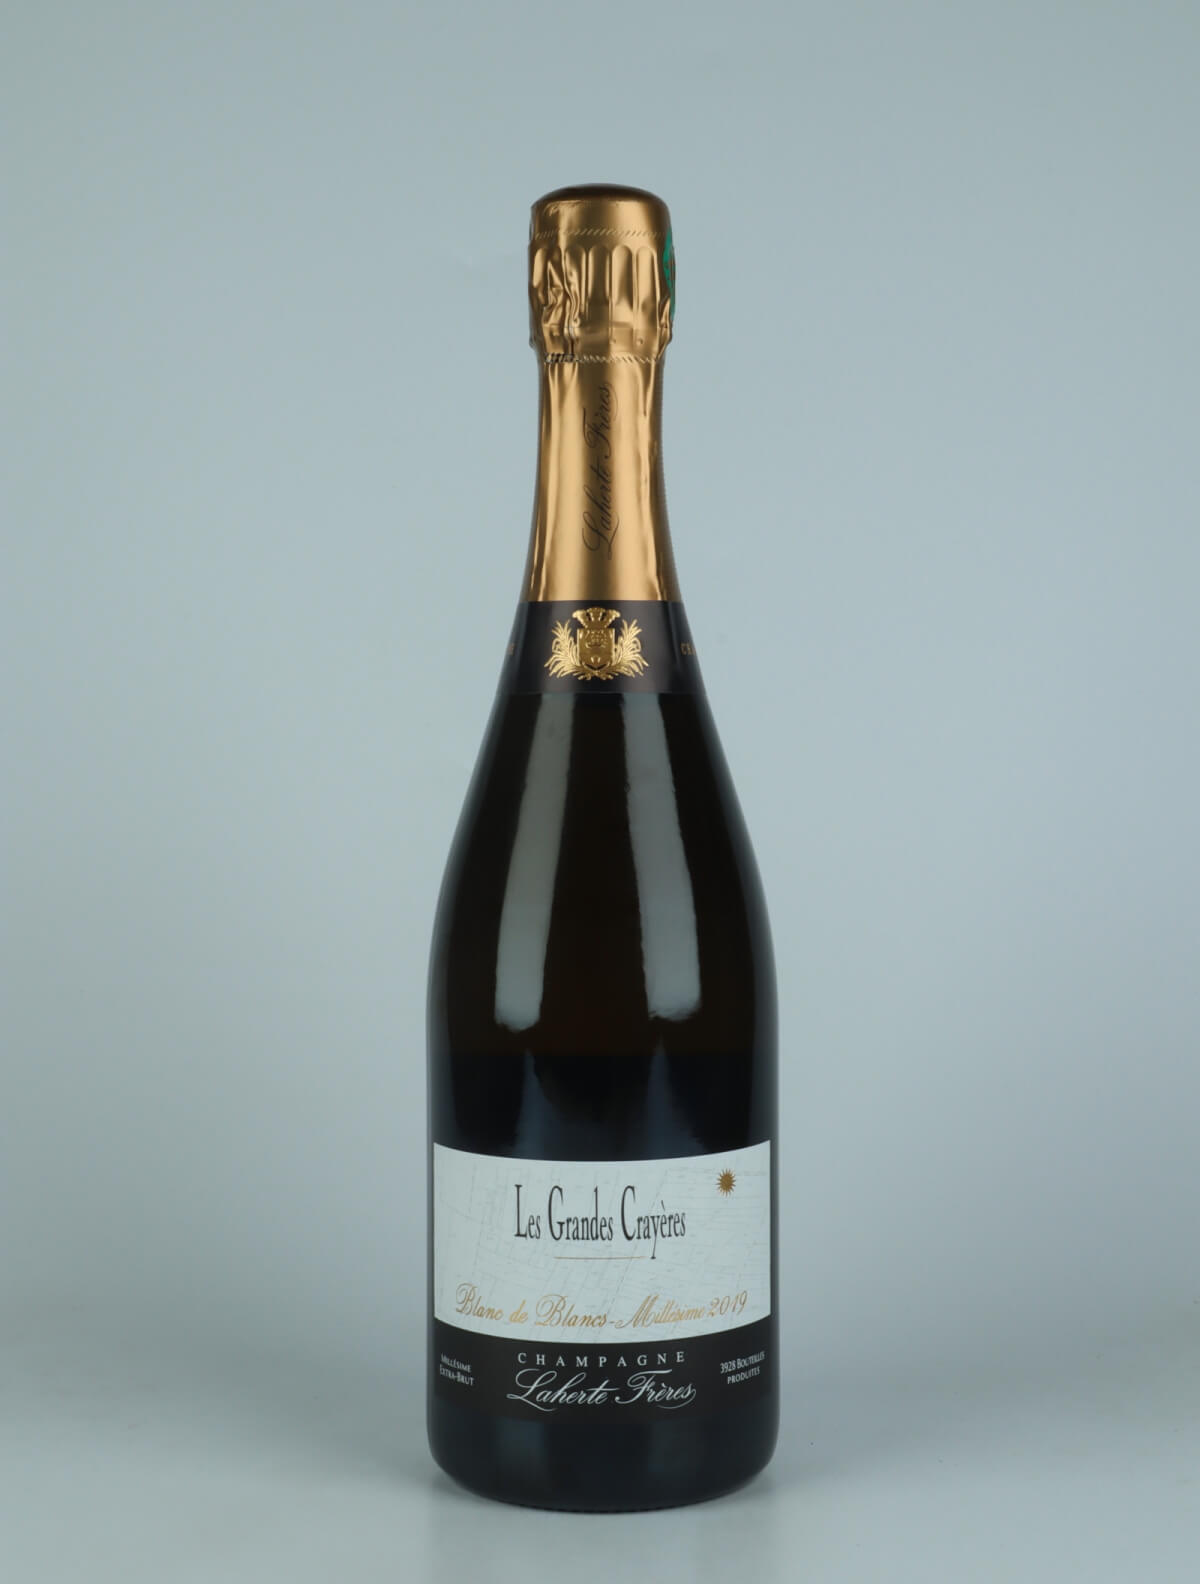 A bottle 2019 Les Grandes Crayeres Sparkling from Laherte Frères, Champagne in France